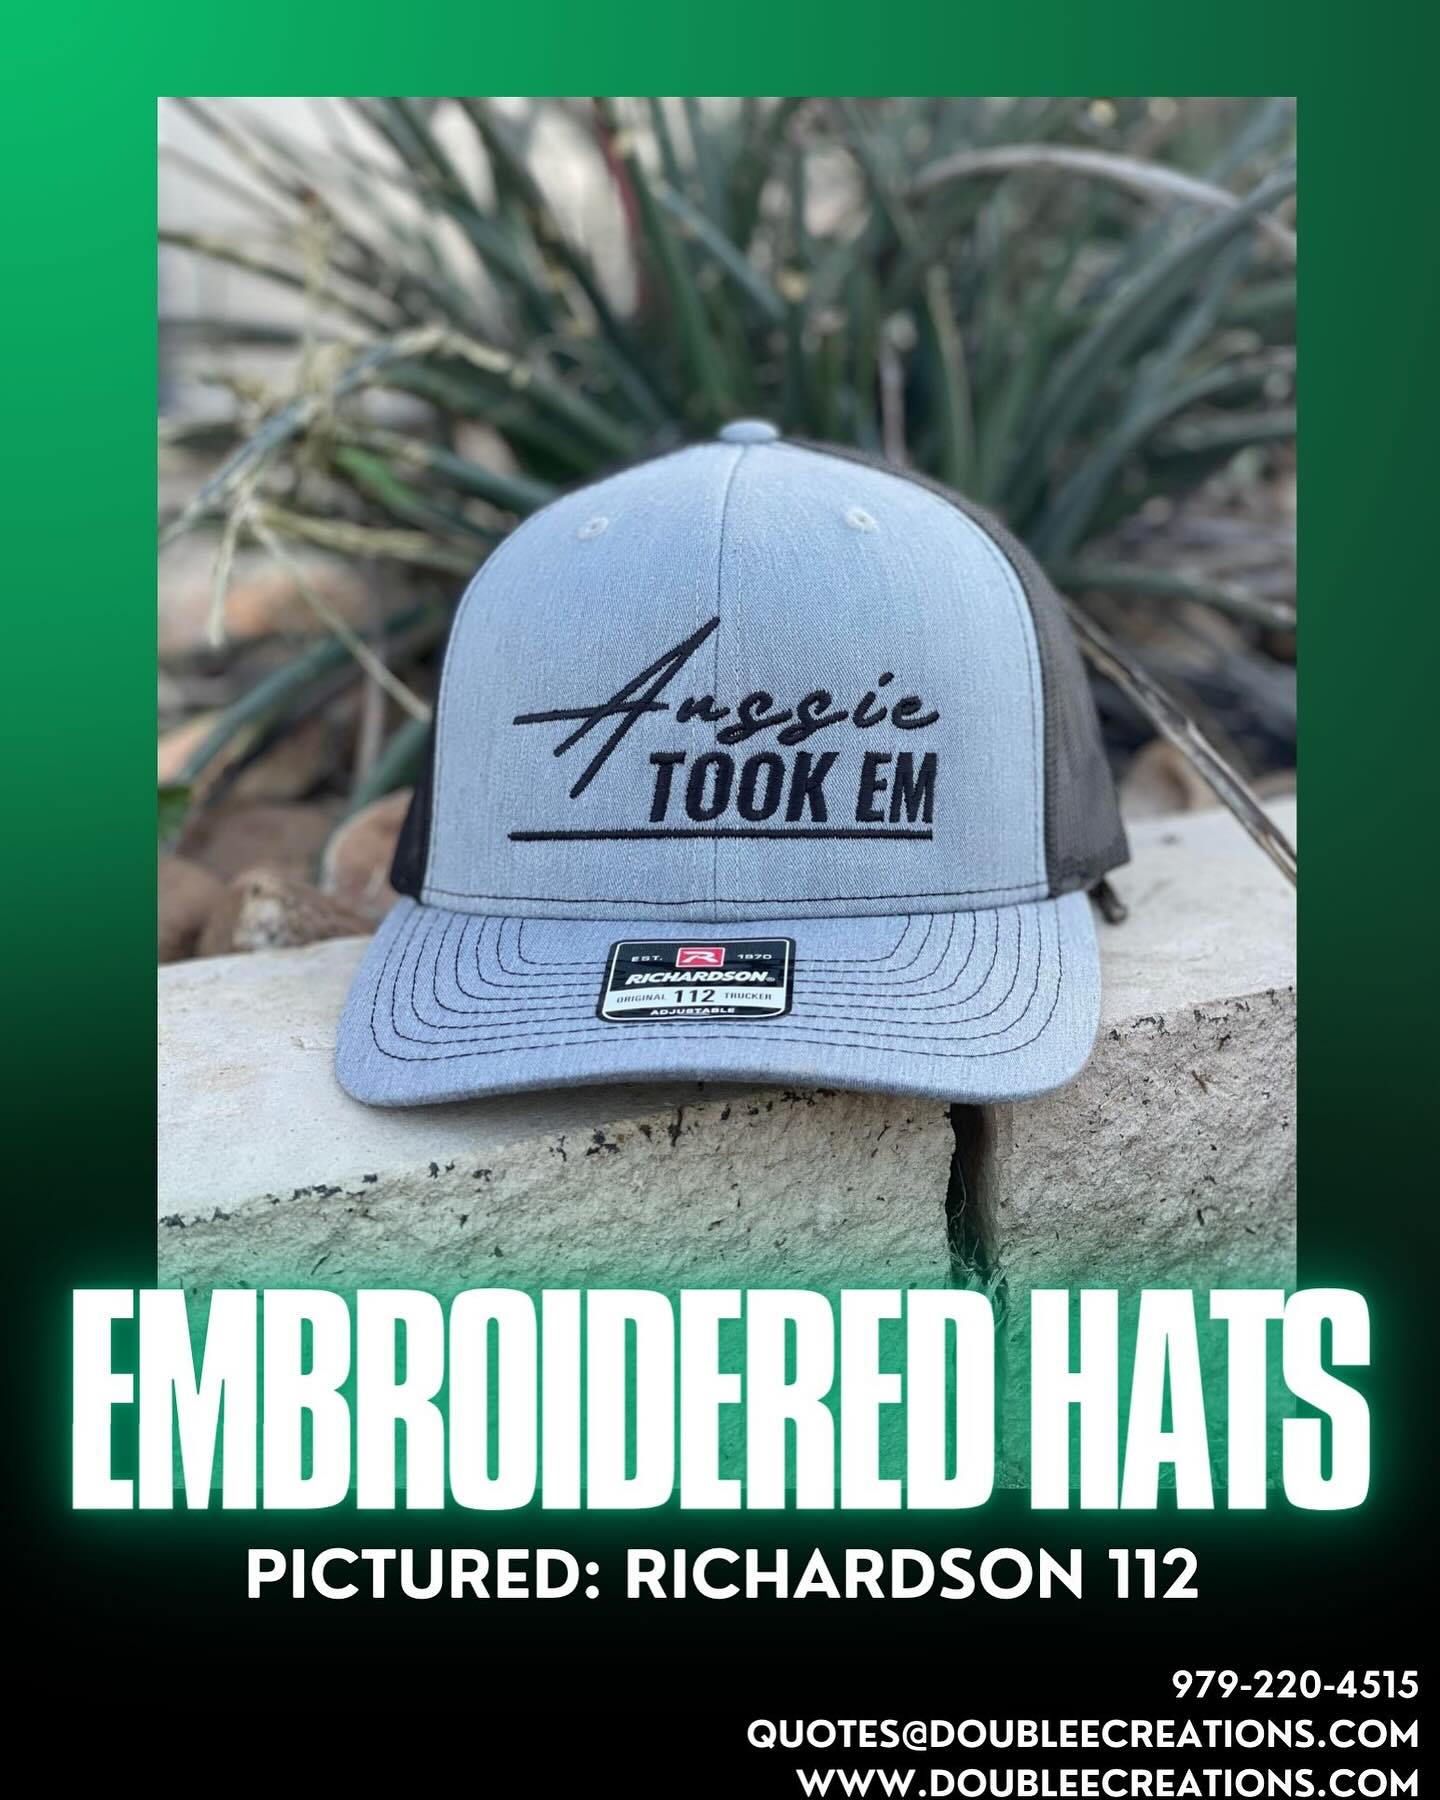 richardson 112, hat, trucker cap, hats, hat, cap, trucker cap, mesh back, snap back, hat snap back, trucker cap, trucker hat, trucker style cap, mesh, snap back hat, snap back cap